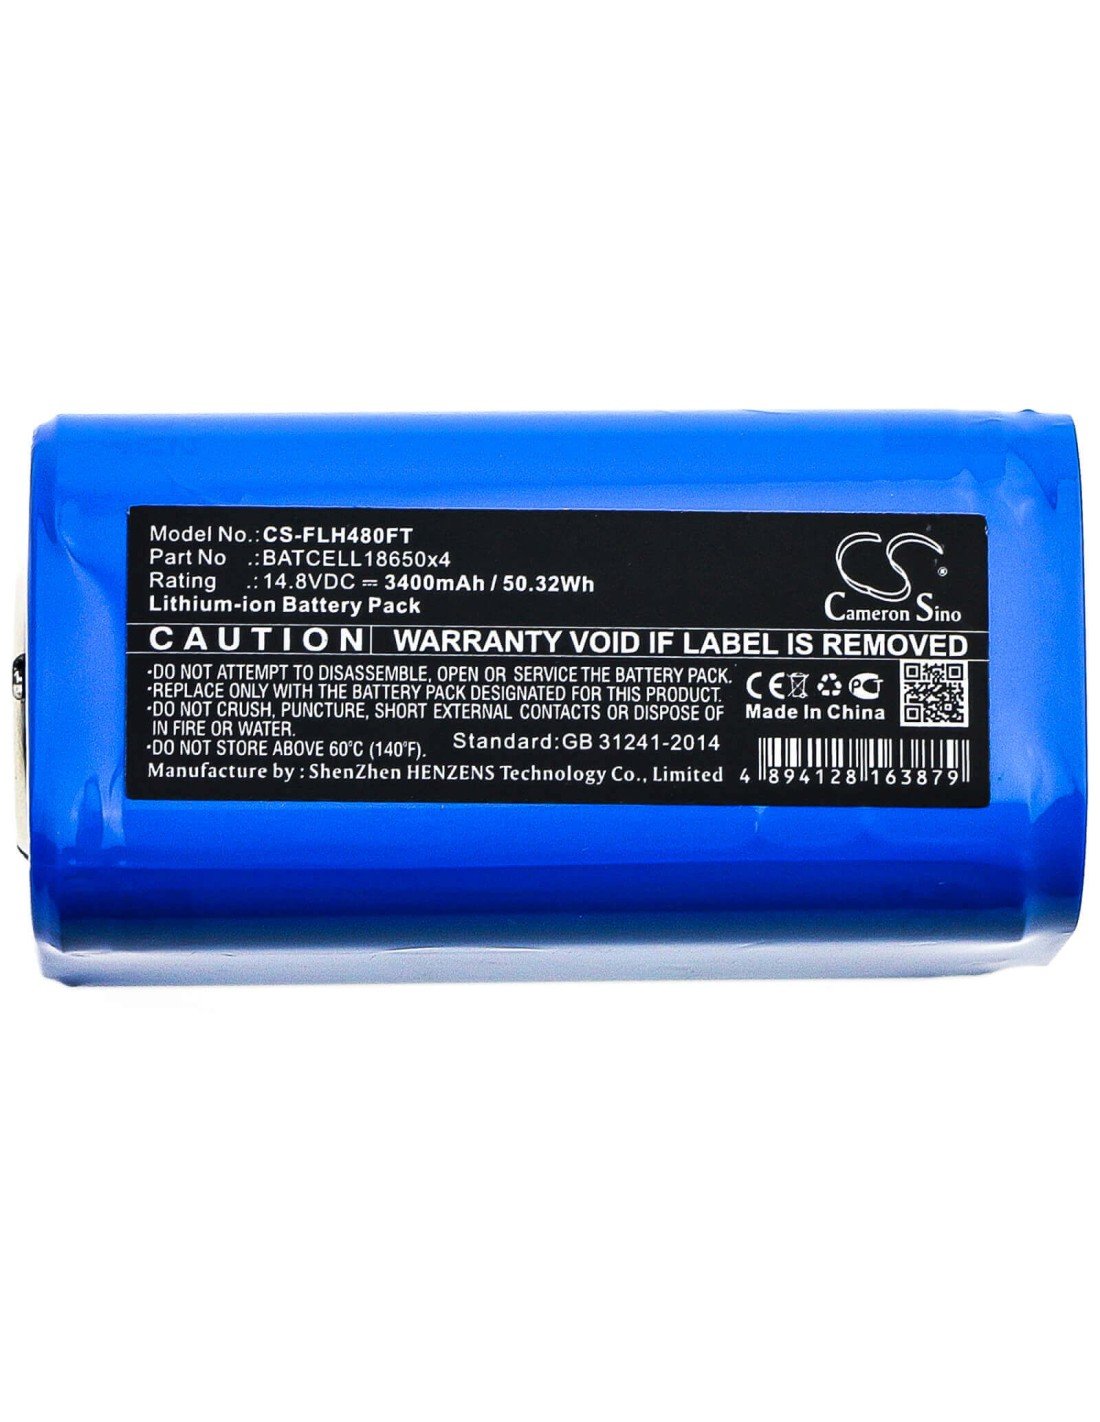 Battery for Bigblue, Tl4000p, Tl4500p, Tl4800p 14.8V, 3400mAh - 50.32Wh